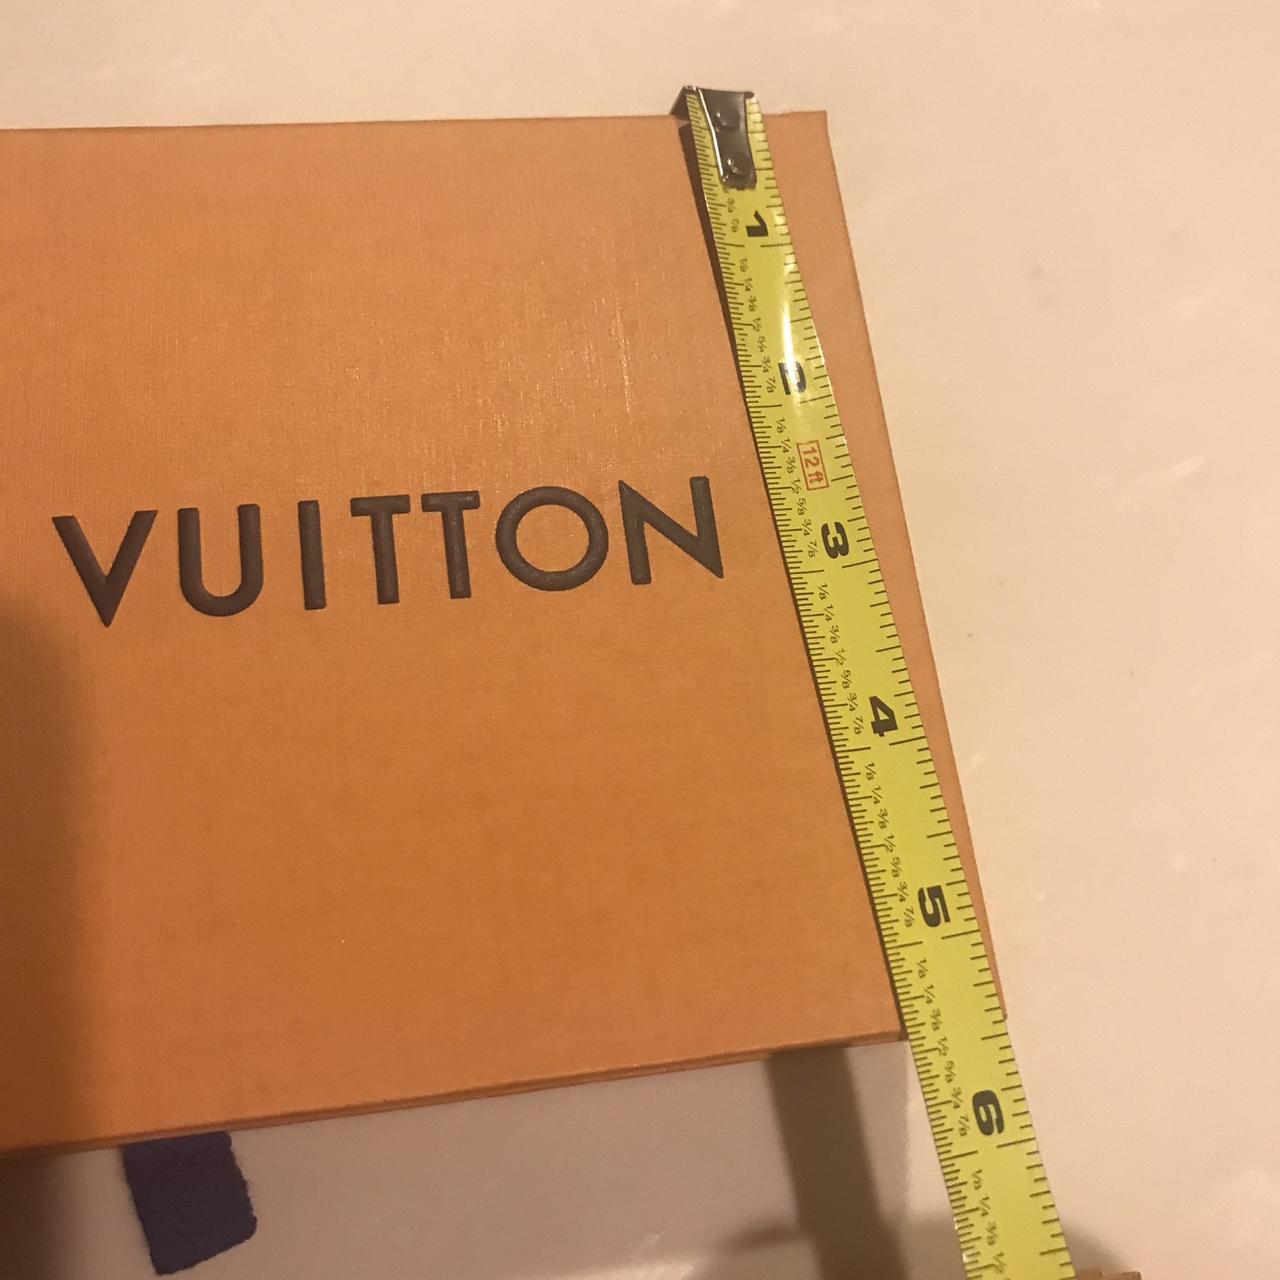 Louis Vuitton magnetic medium box Box Size 37.5 x - Depop